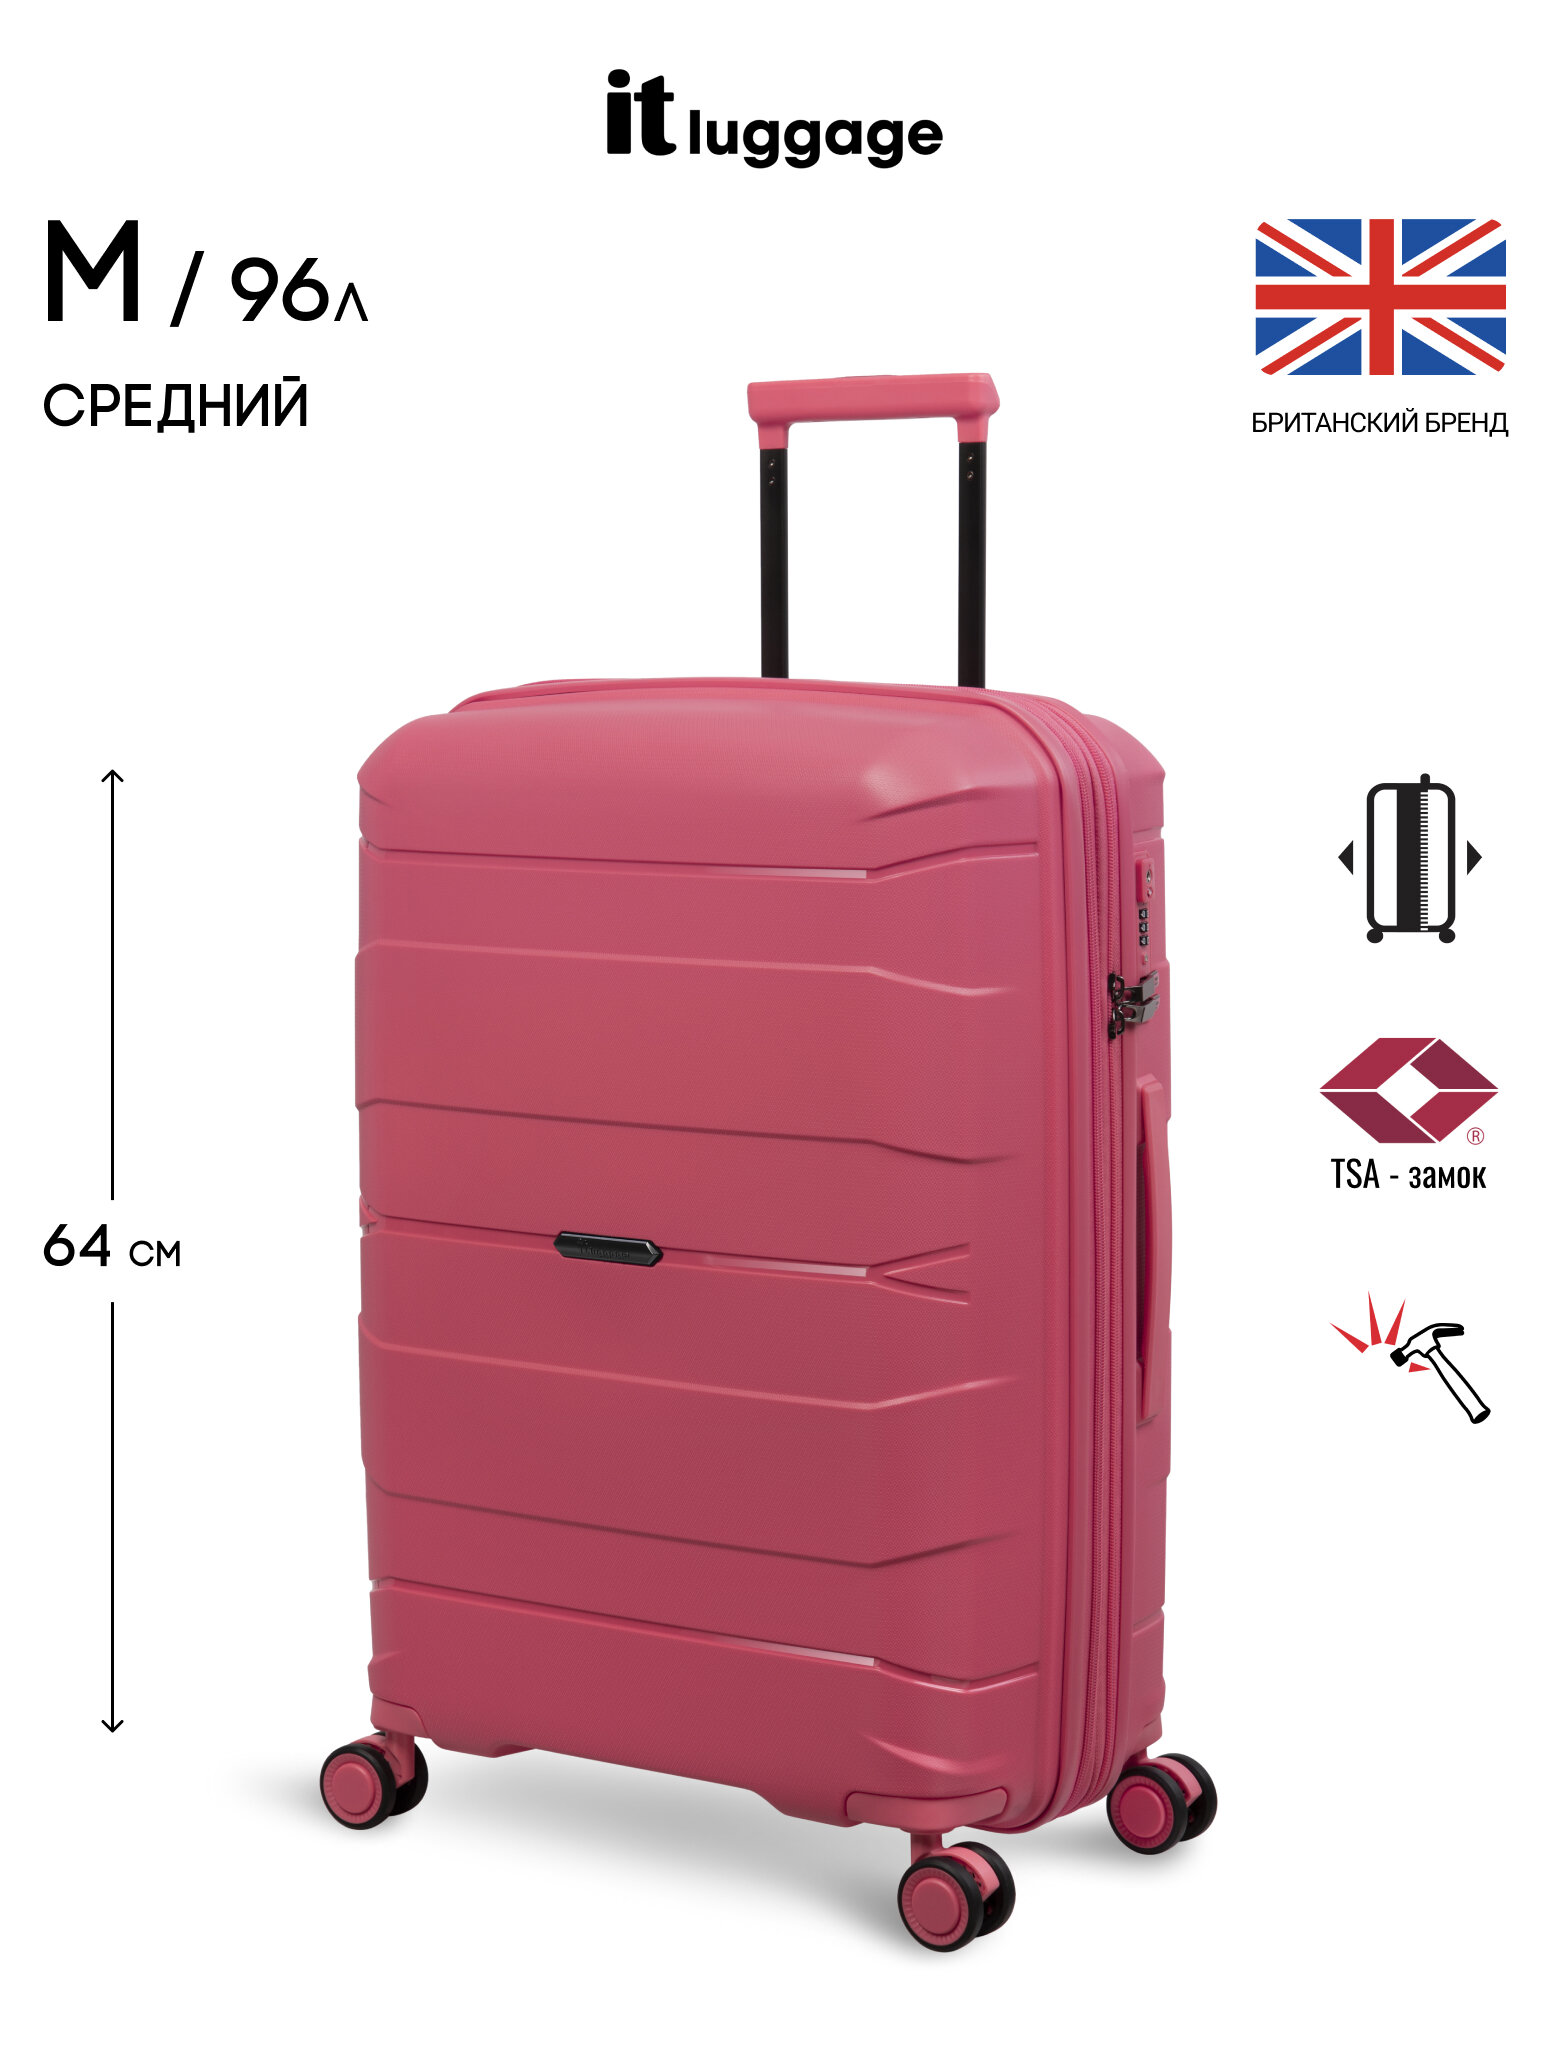 Чемодан на колесах it luggage/средний размер - M/96л/полипропилен/увеличение объема